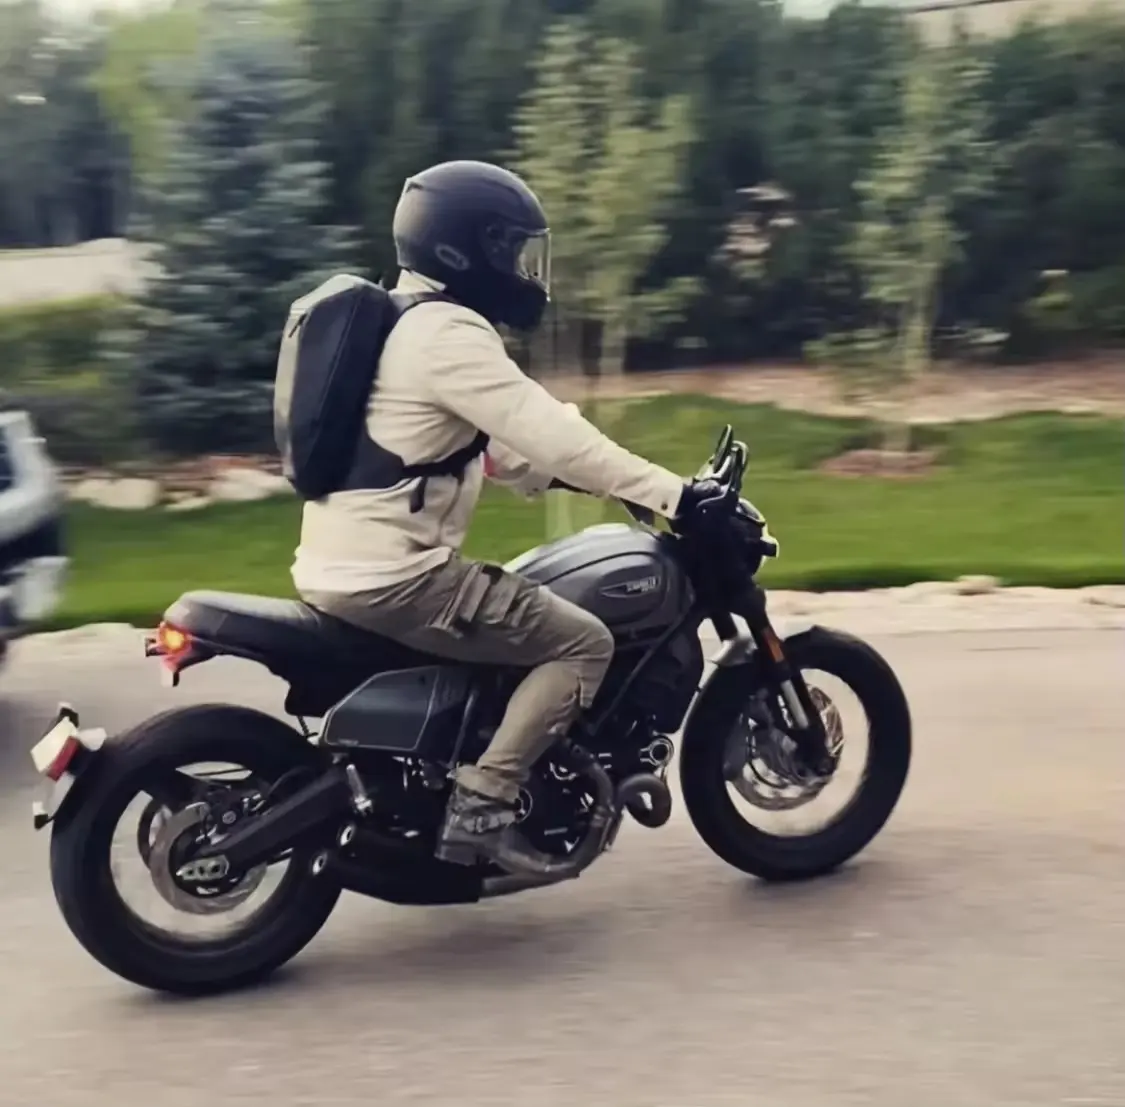 New Travel Riding Bag Motorcycle Waterproof Motorcycle Dry Bag Motorcycle Helmet Backpack